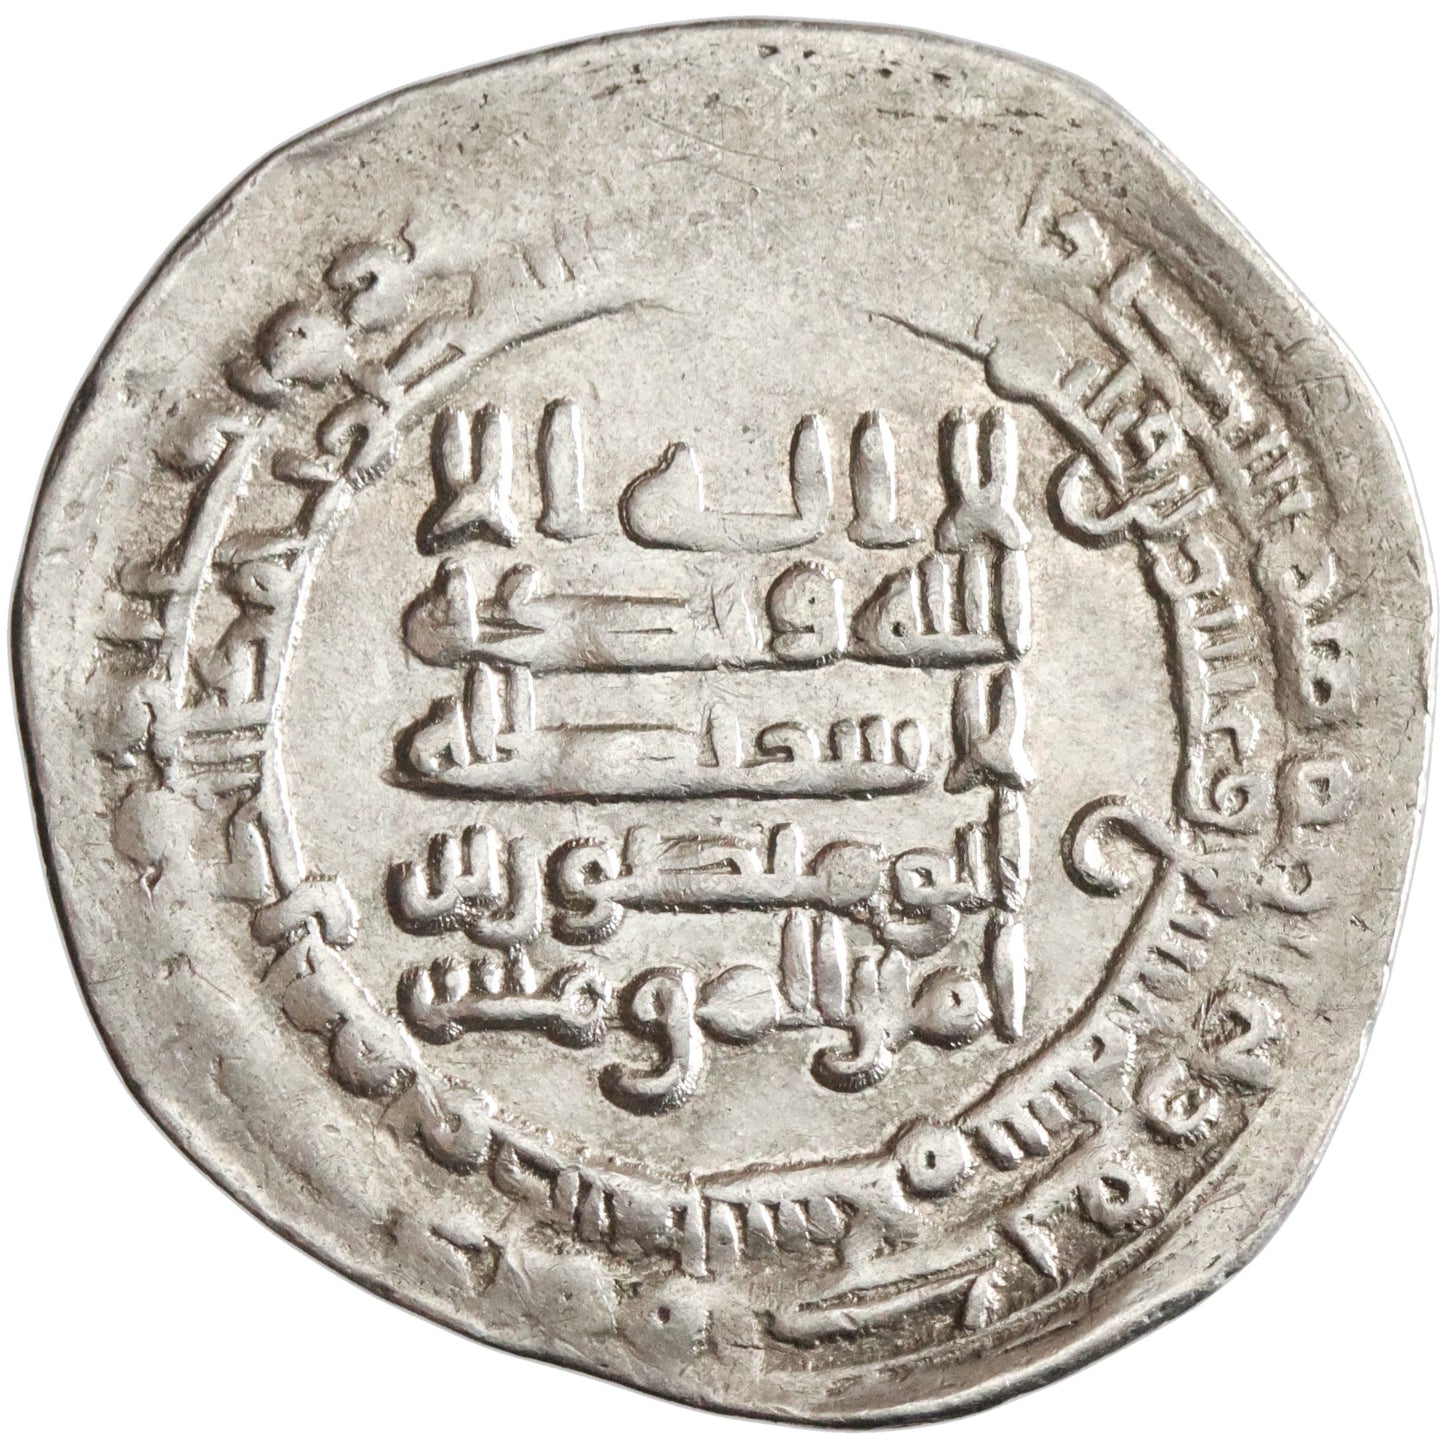 Abbasid, al-Muttaqi, silver dirham, Madinat al-Salam (Baghdad) mint, AH 329, citing Abu Mansur